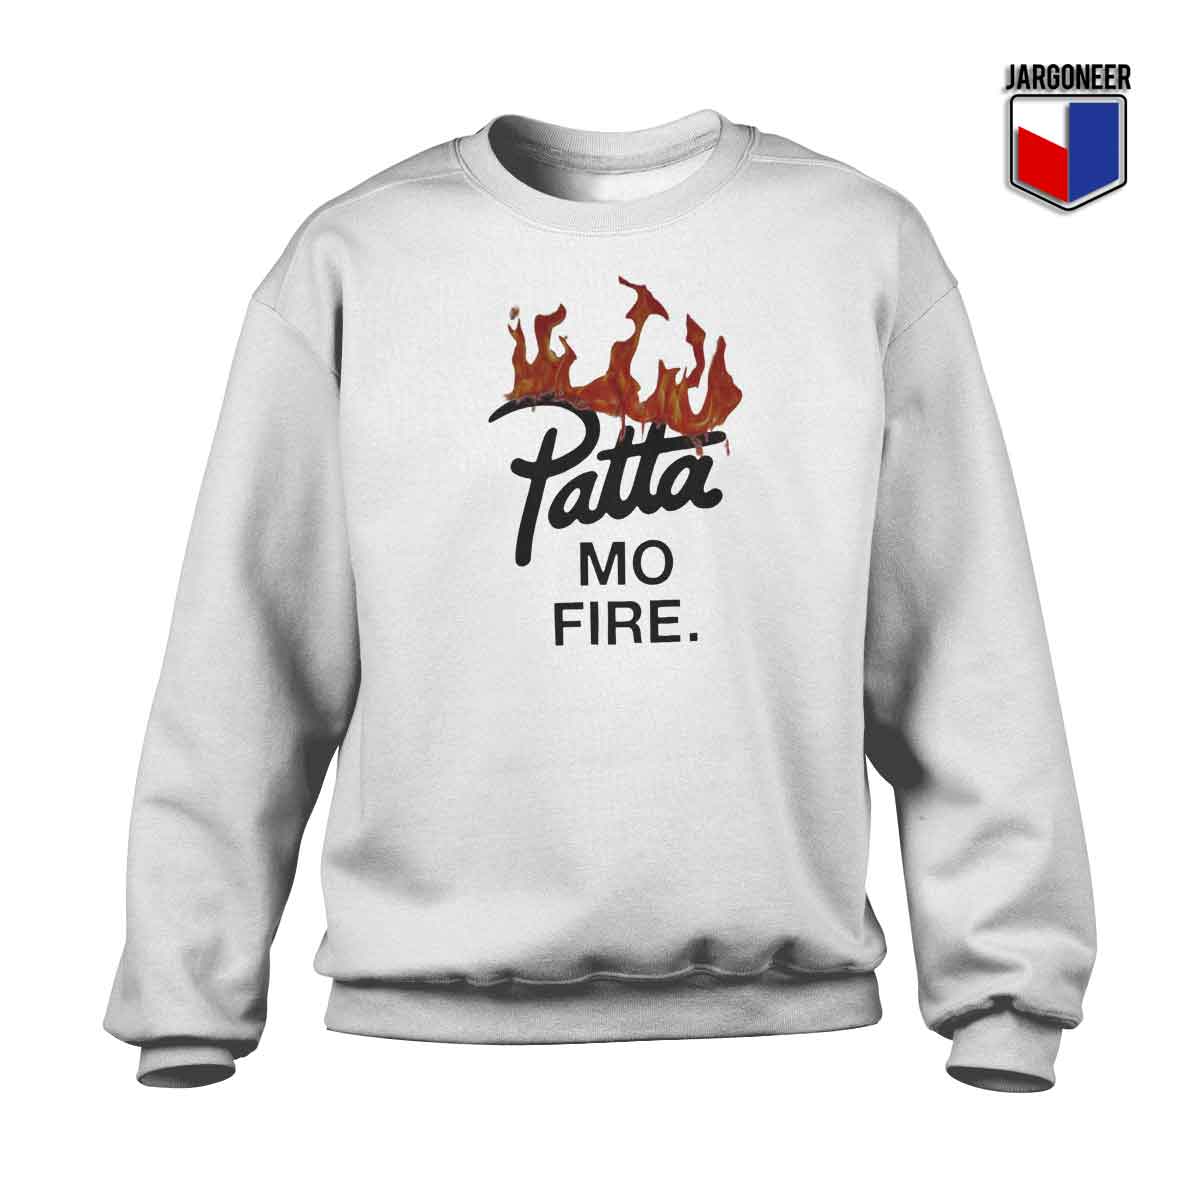 Patta Mo Fire 2 - Shop Unique Graphic Cool Shirt Designs